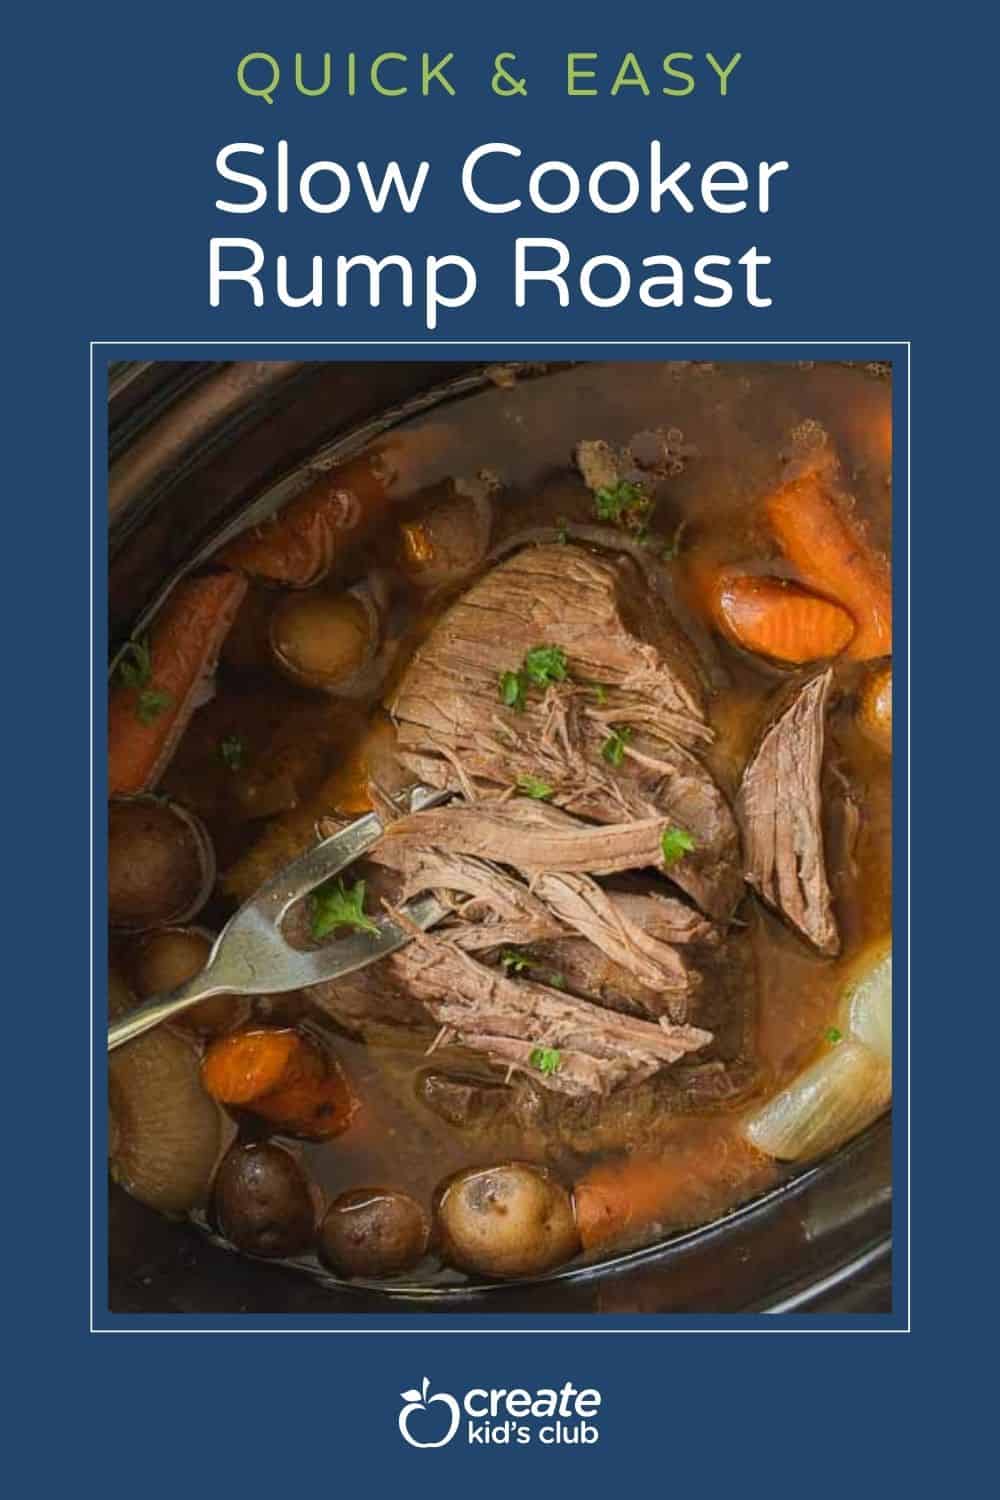 pin of a crockpot rump roast